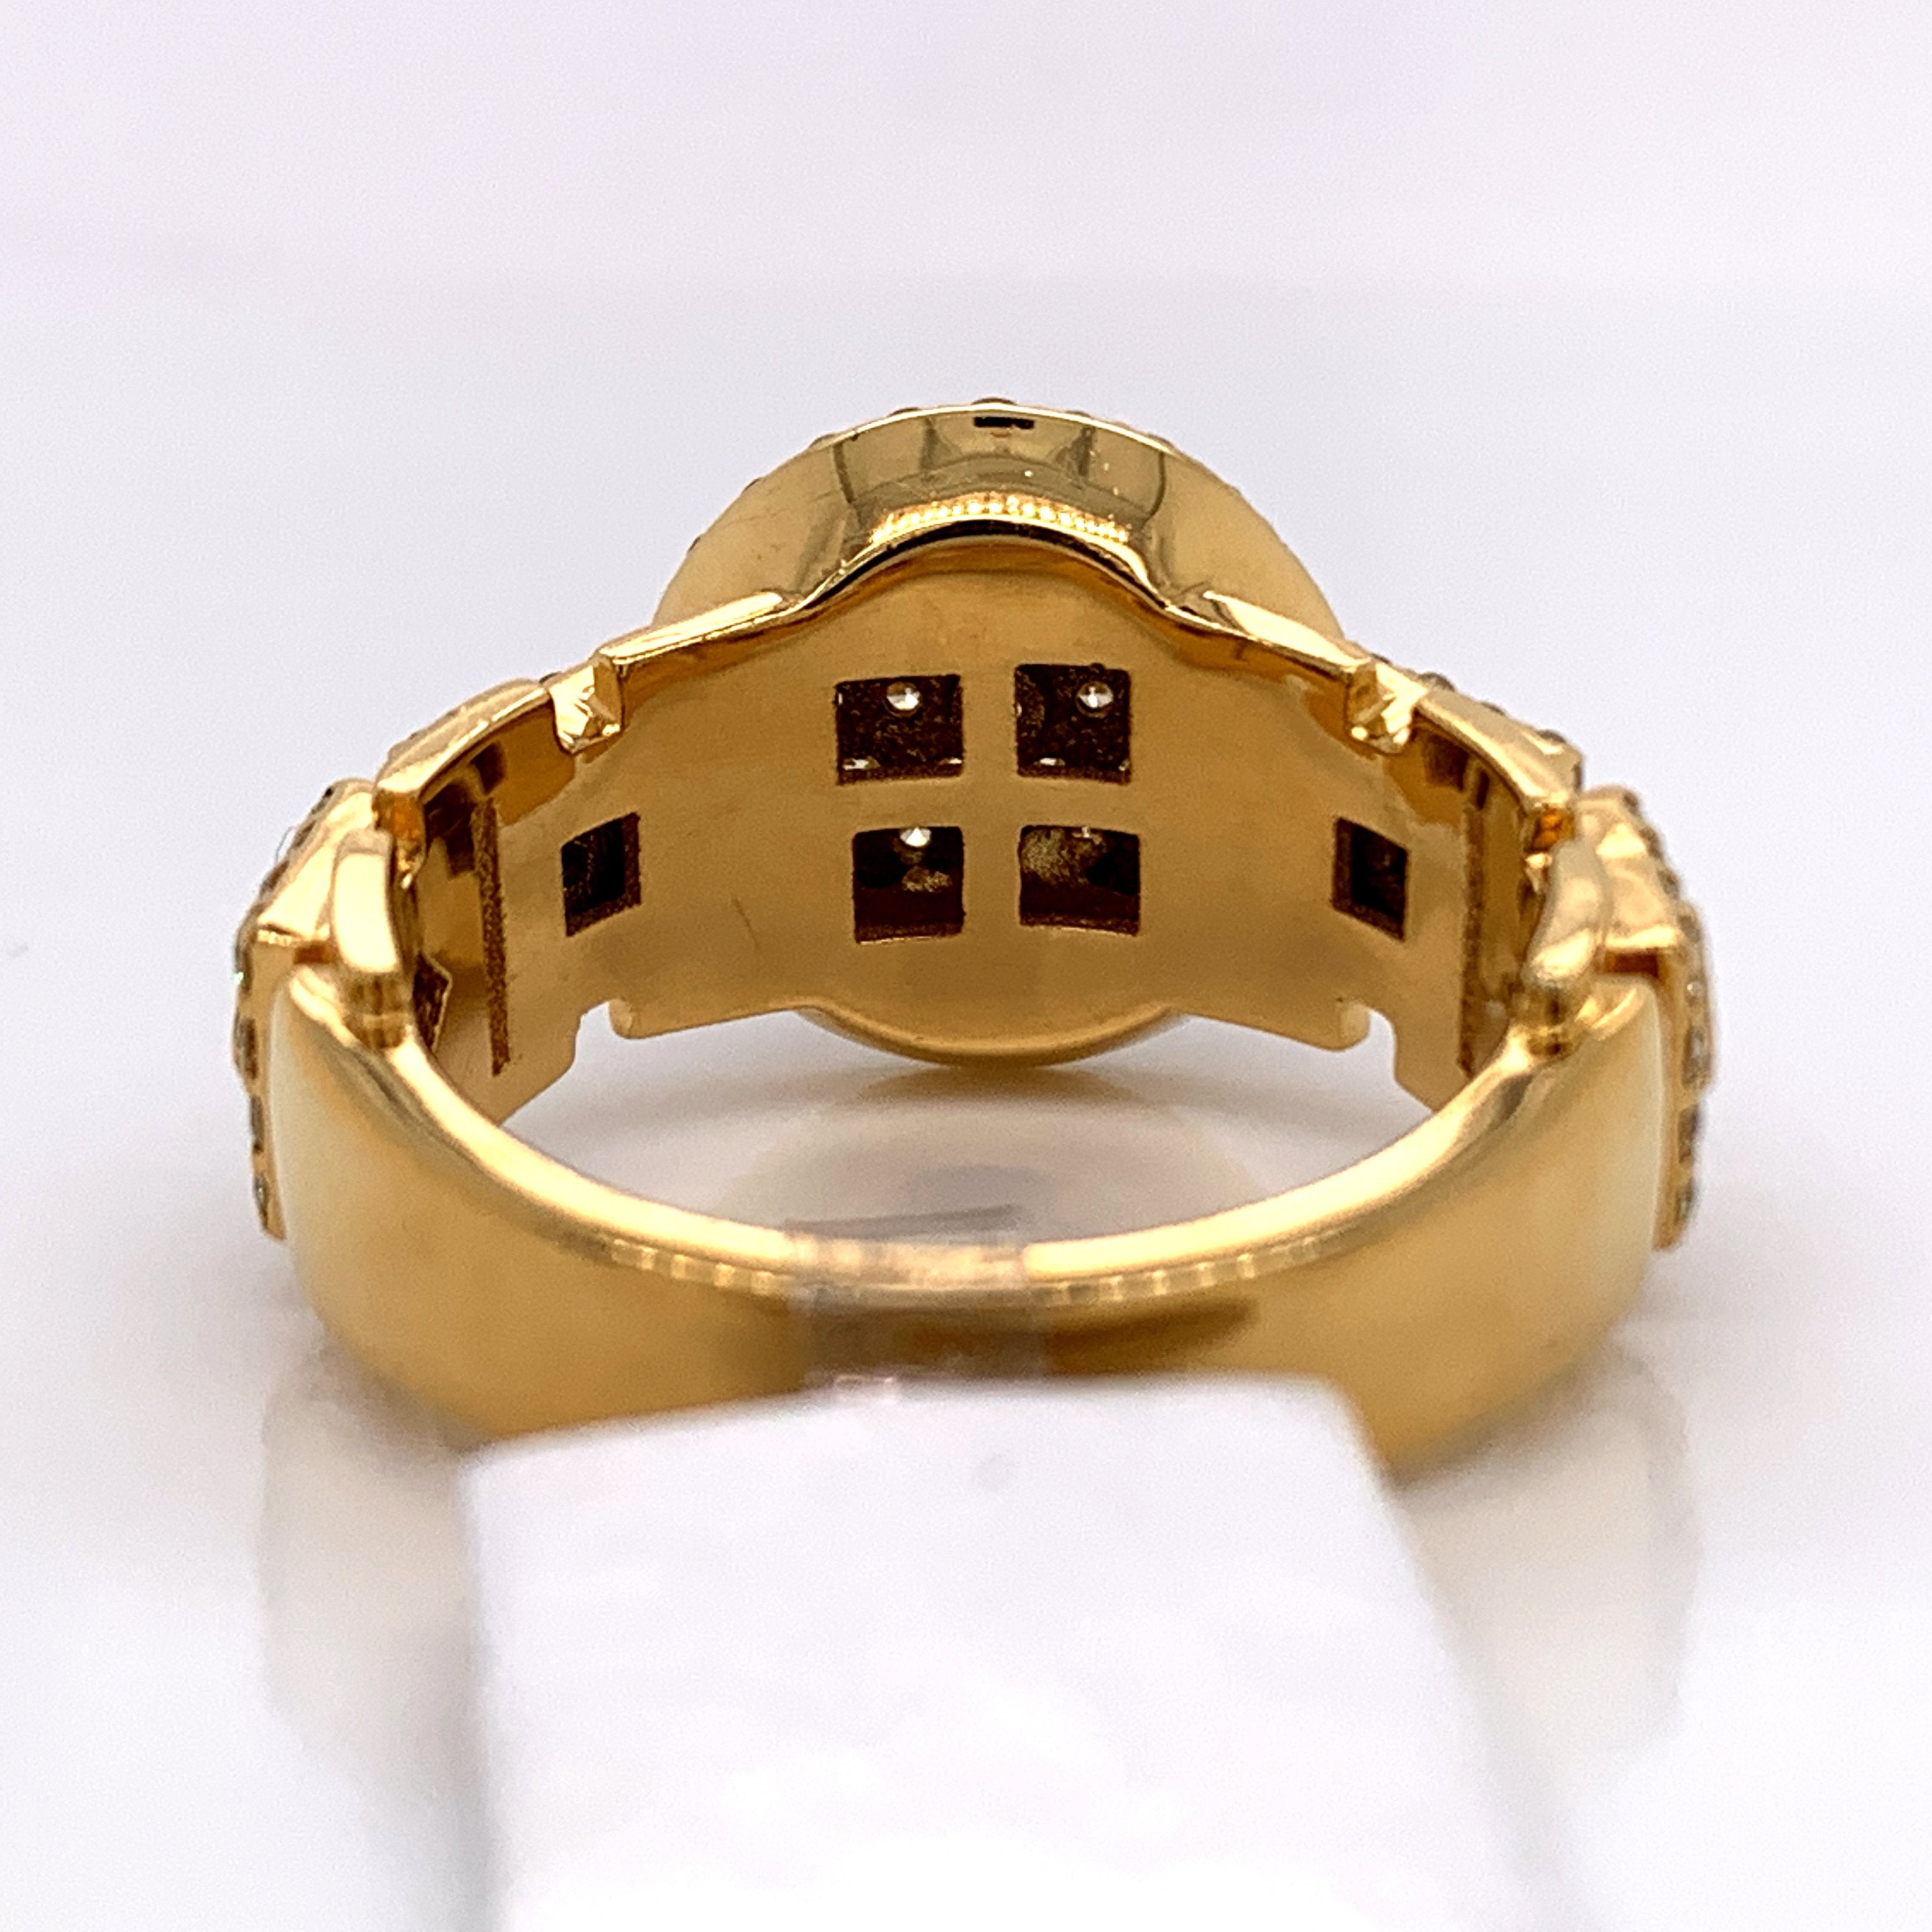 1.55CT Diamond 10K Gold Ring - White Carat Diamonds 